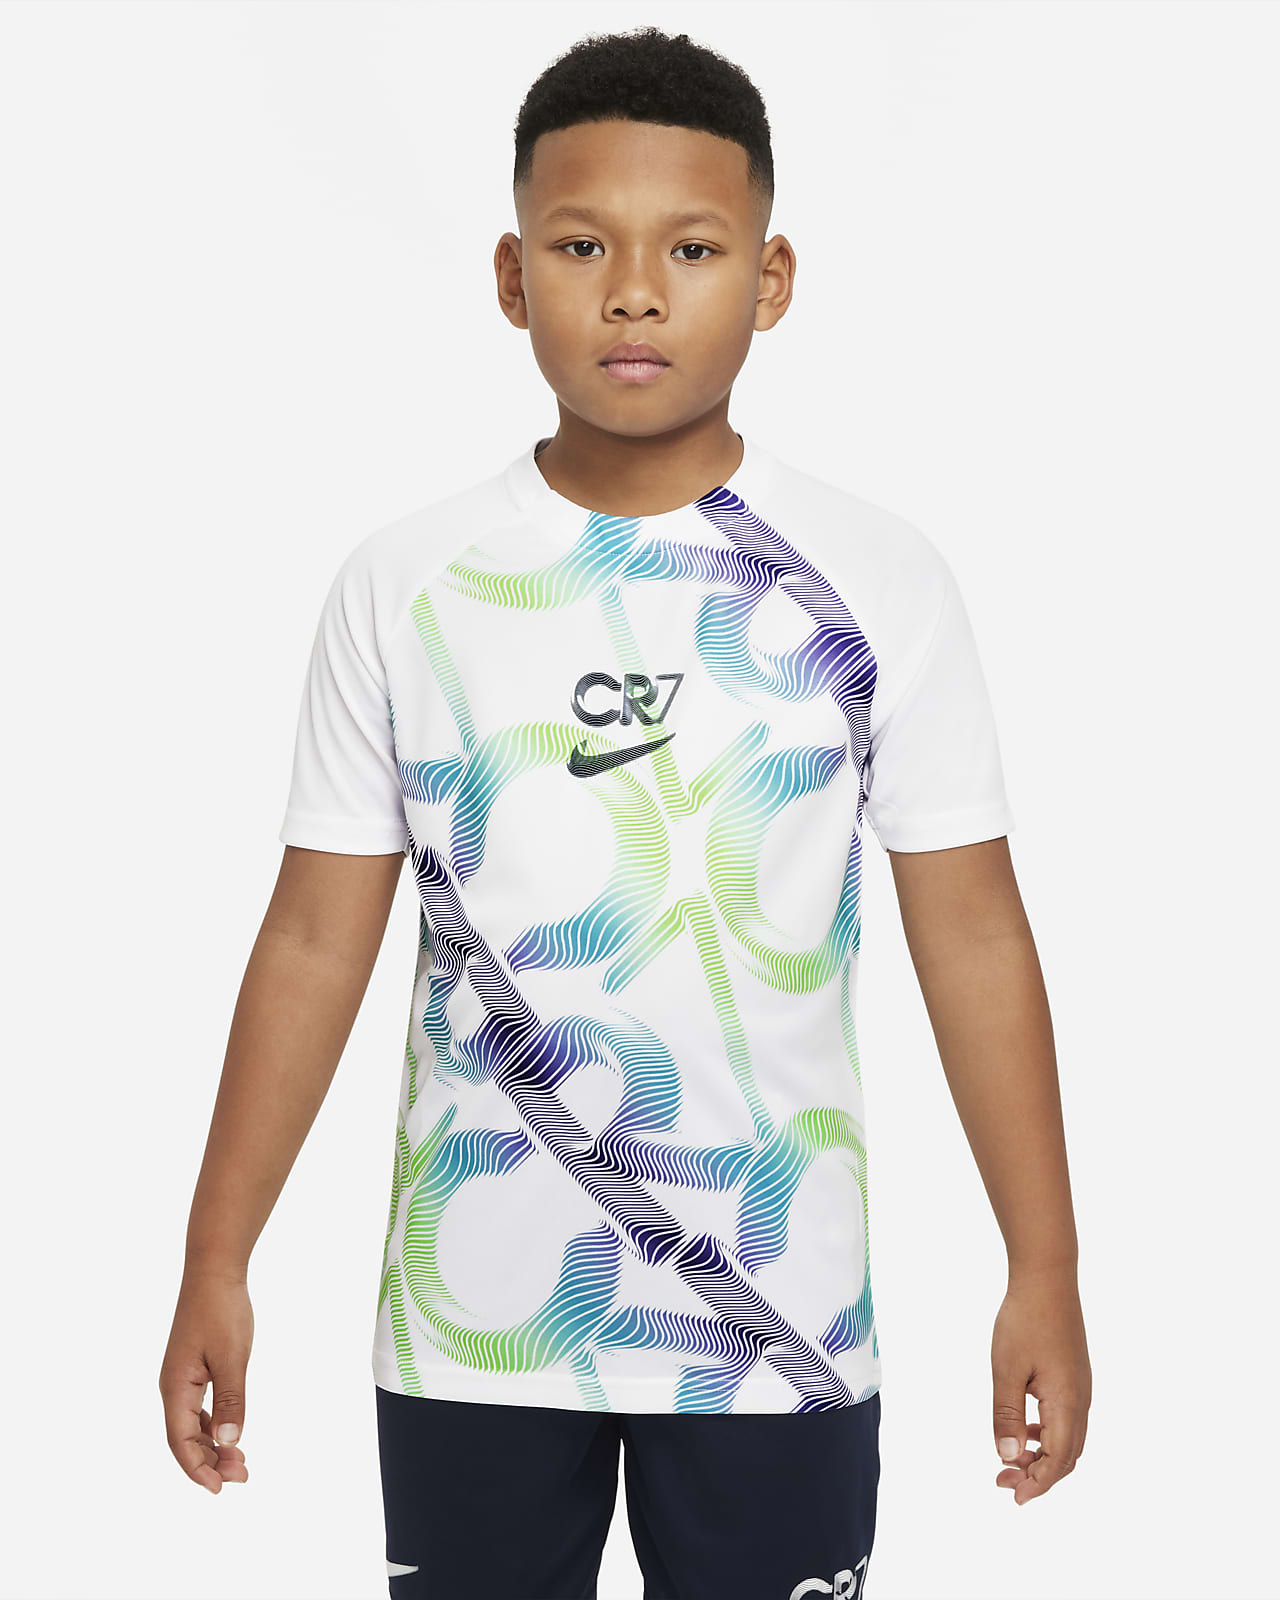 Nike Dri-FIT CR7 Kurzarm-Fußballoberteil für ältere Kinder